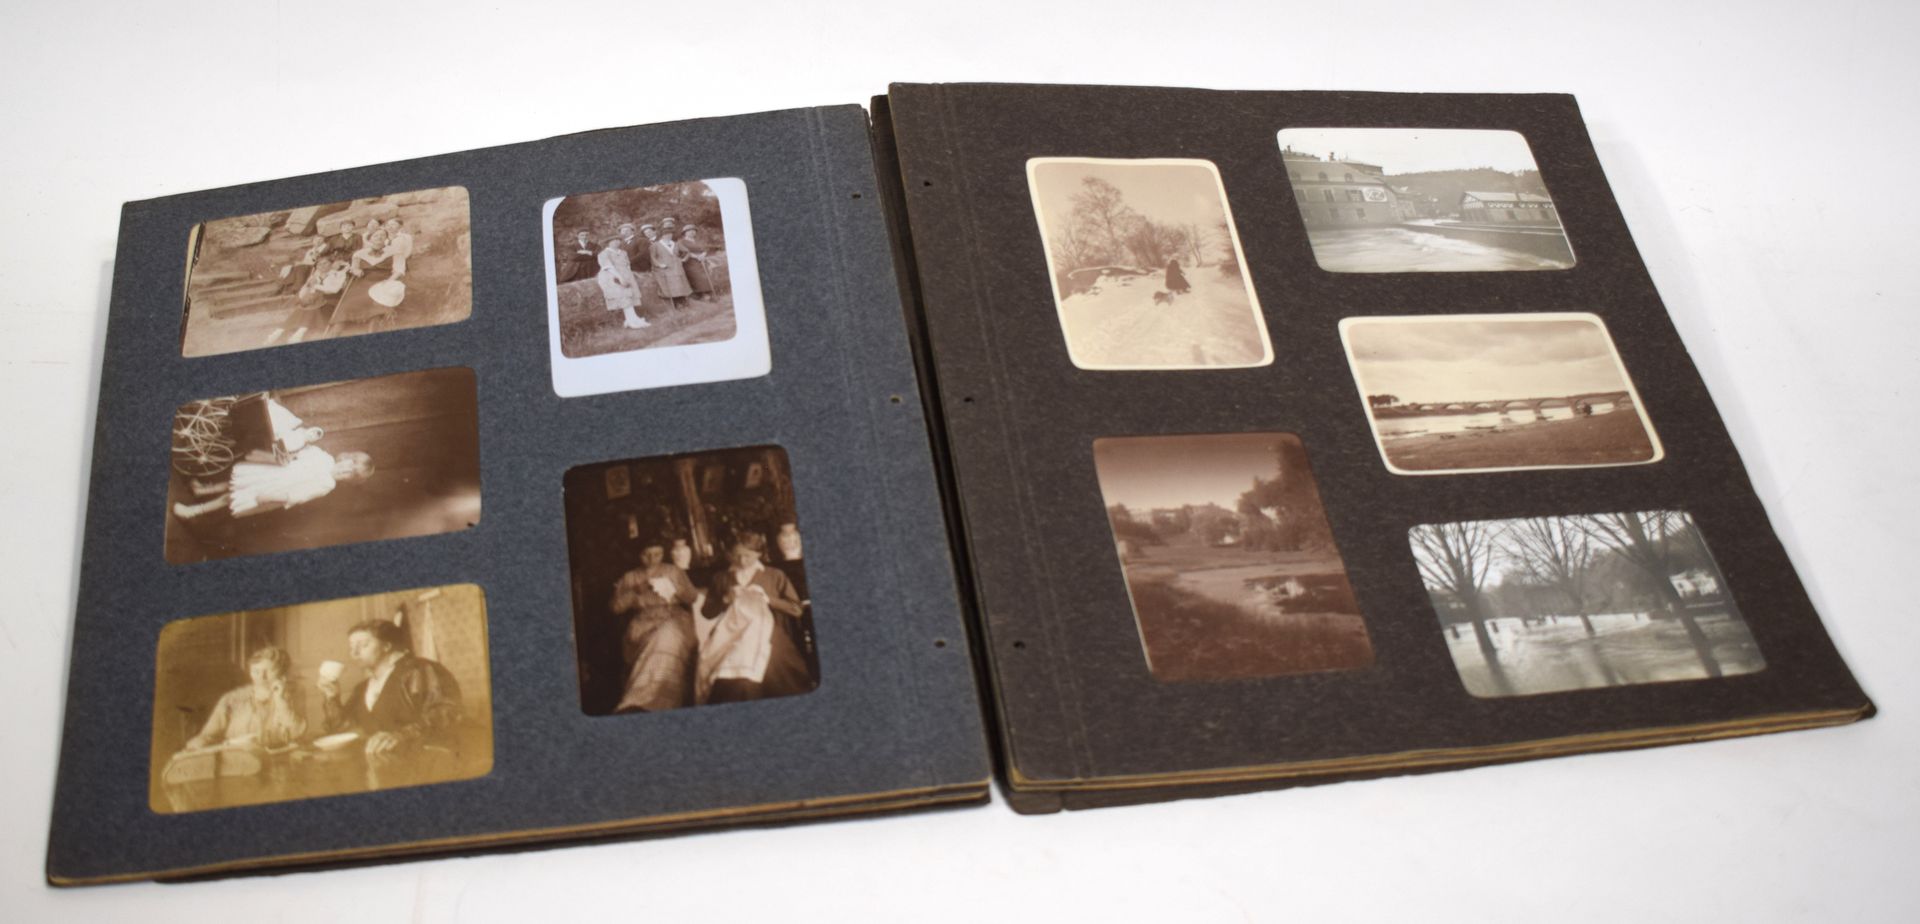 Null (ALBUM)美丽的家庭相册(CLAUSEN)由第一次世界大战期间的私人照片组成：美国士兵，部队在武器广场或在冰山上，城市的景色，包括冬天，克劳森的洪&hellip;